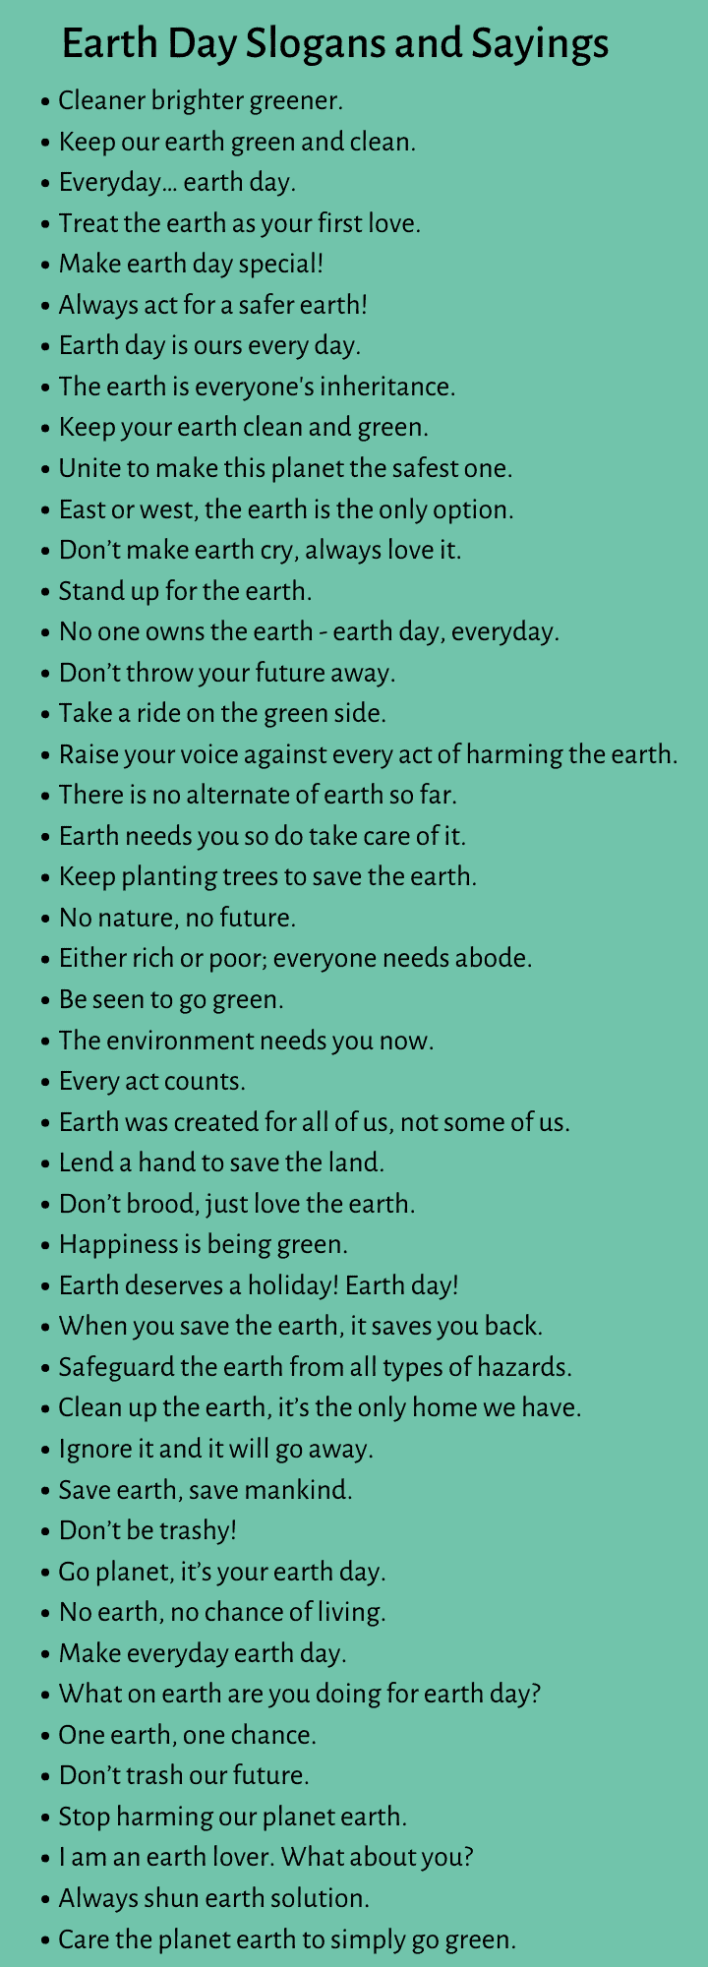 Earth Day Slogans